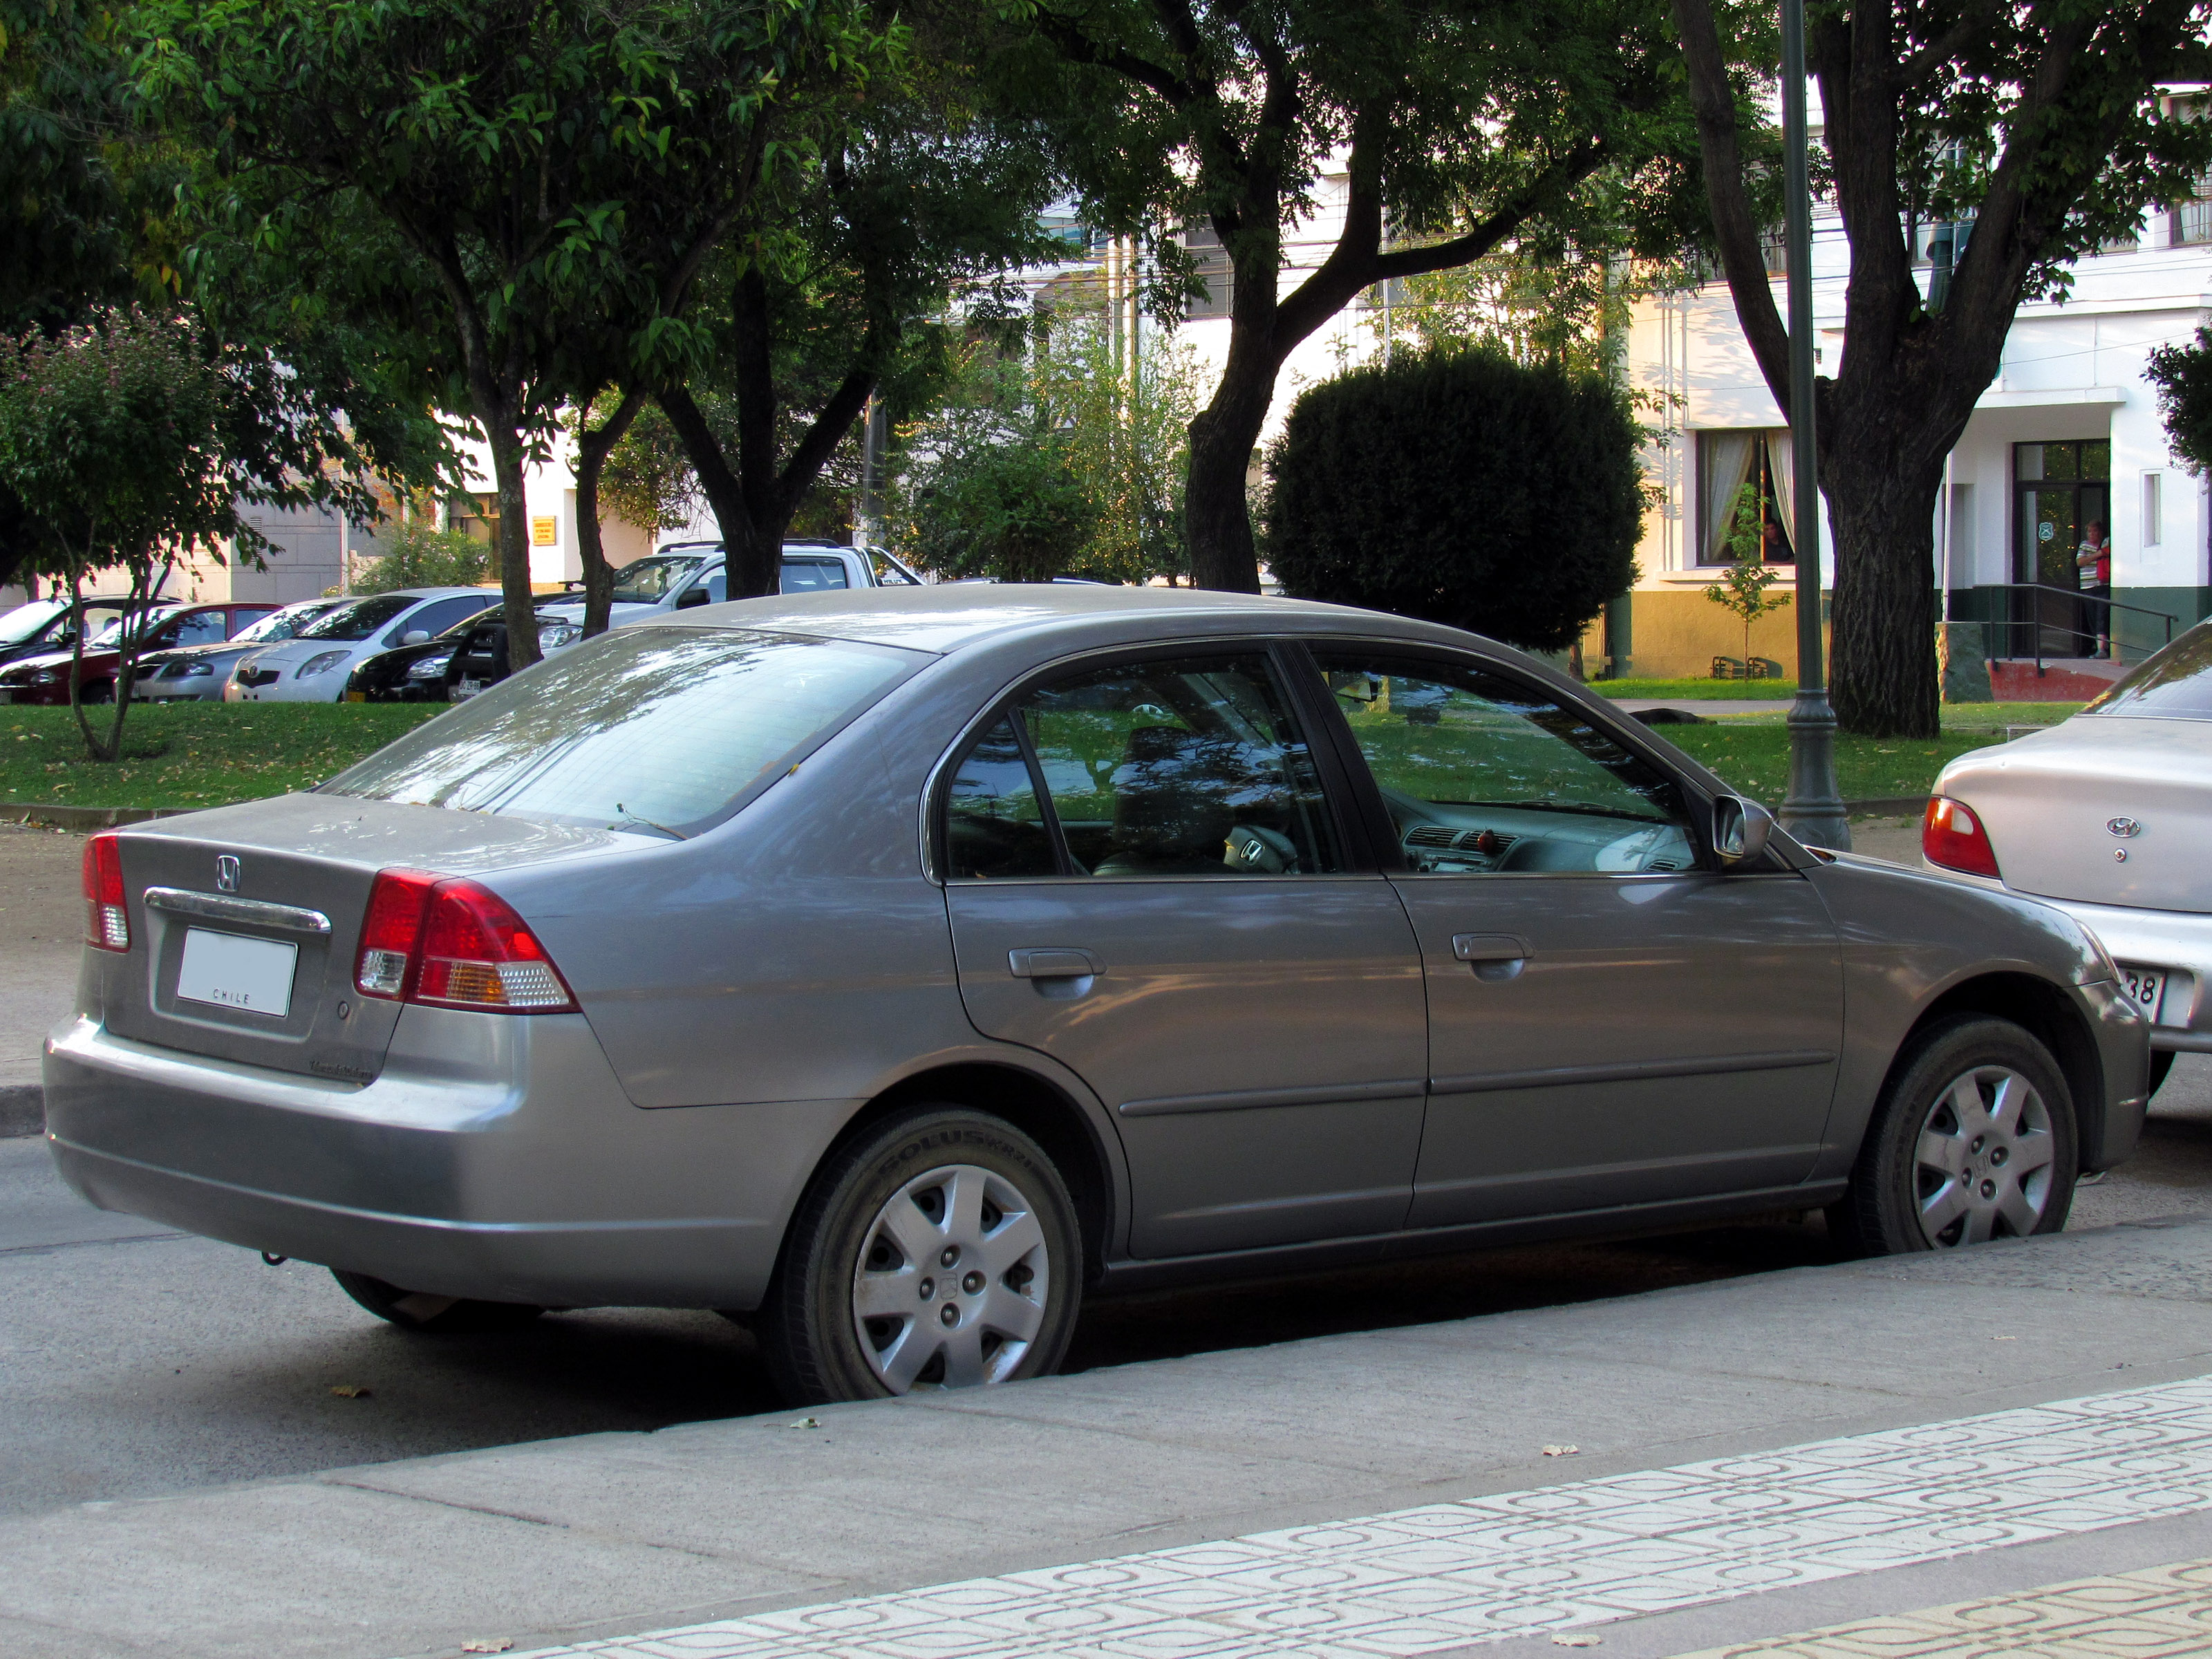 File:Honda Civic 1.7 LX 2004 (16687893702).jpg - Wikimedia Commons